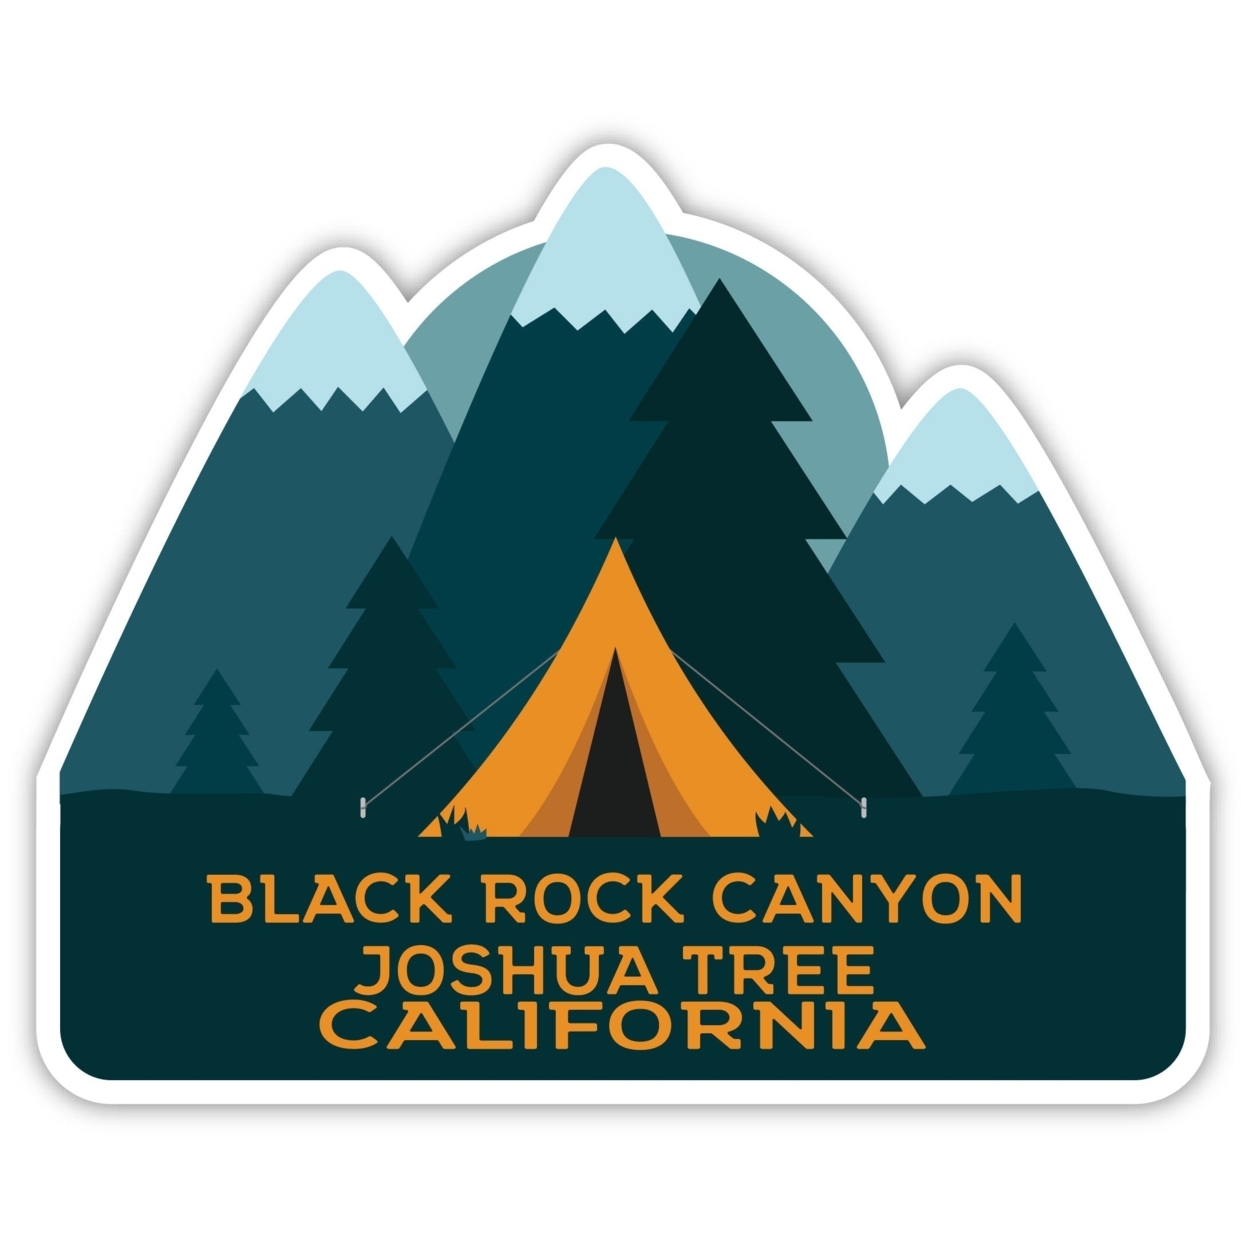 Black Rock Canyon Joshua Tree California Souvenir Decorative Stickers (Choose Theme And Size) - Single Unit, 4-Inch, Tent